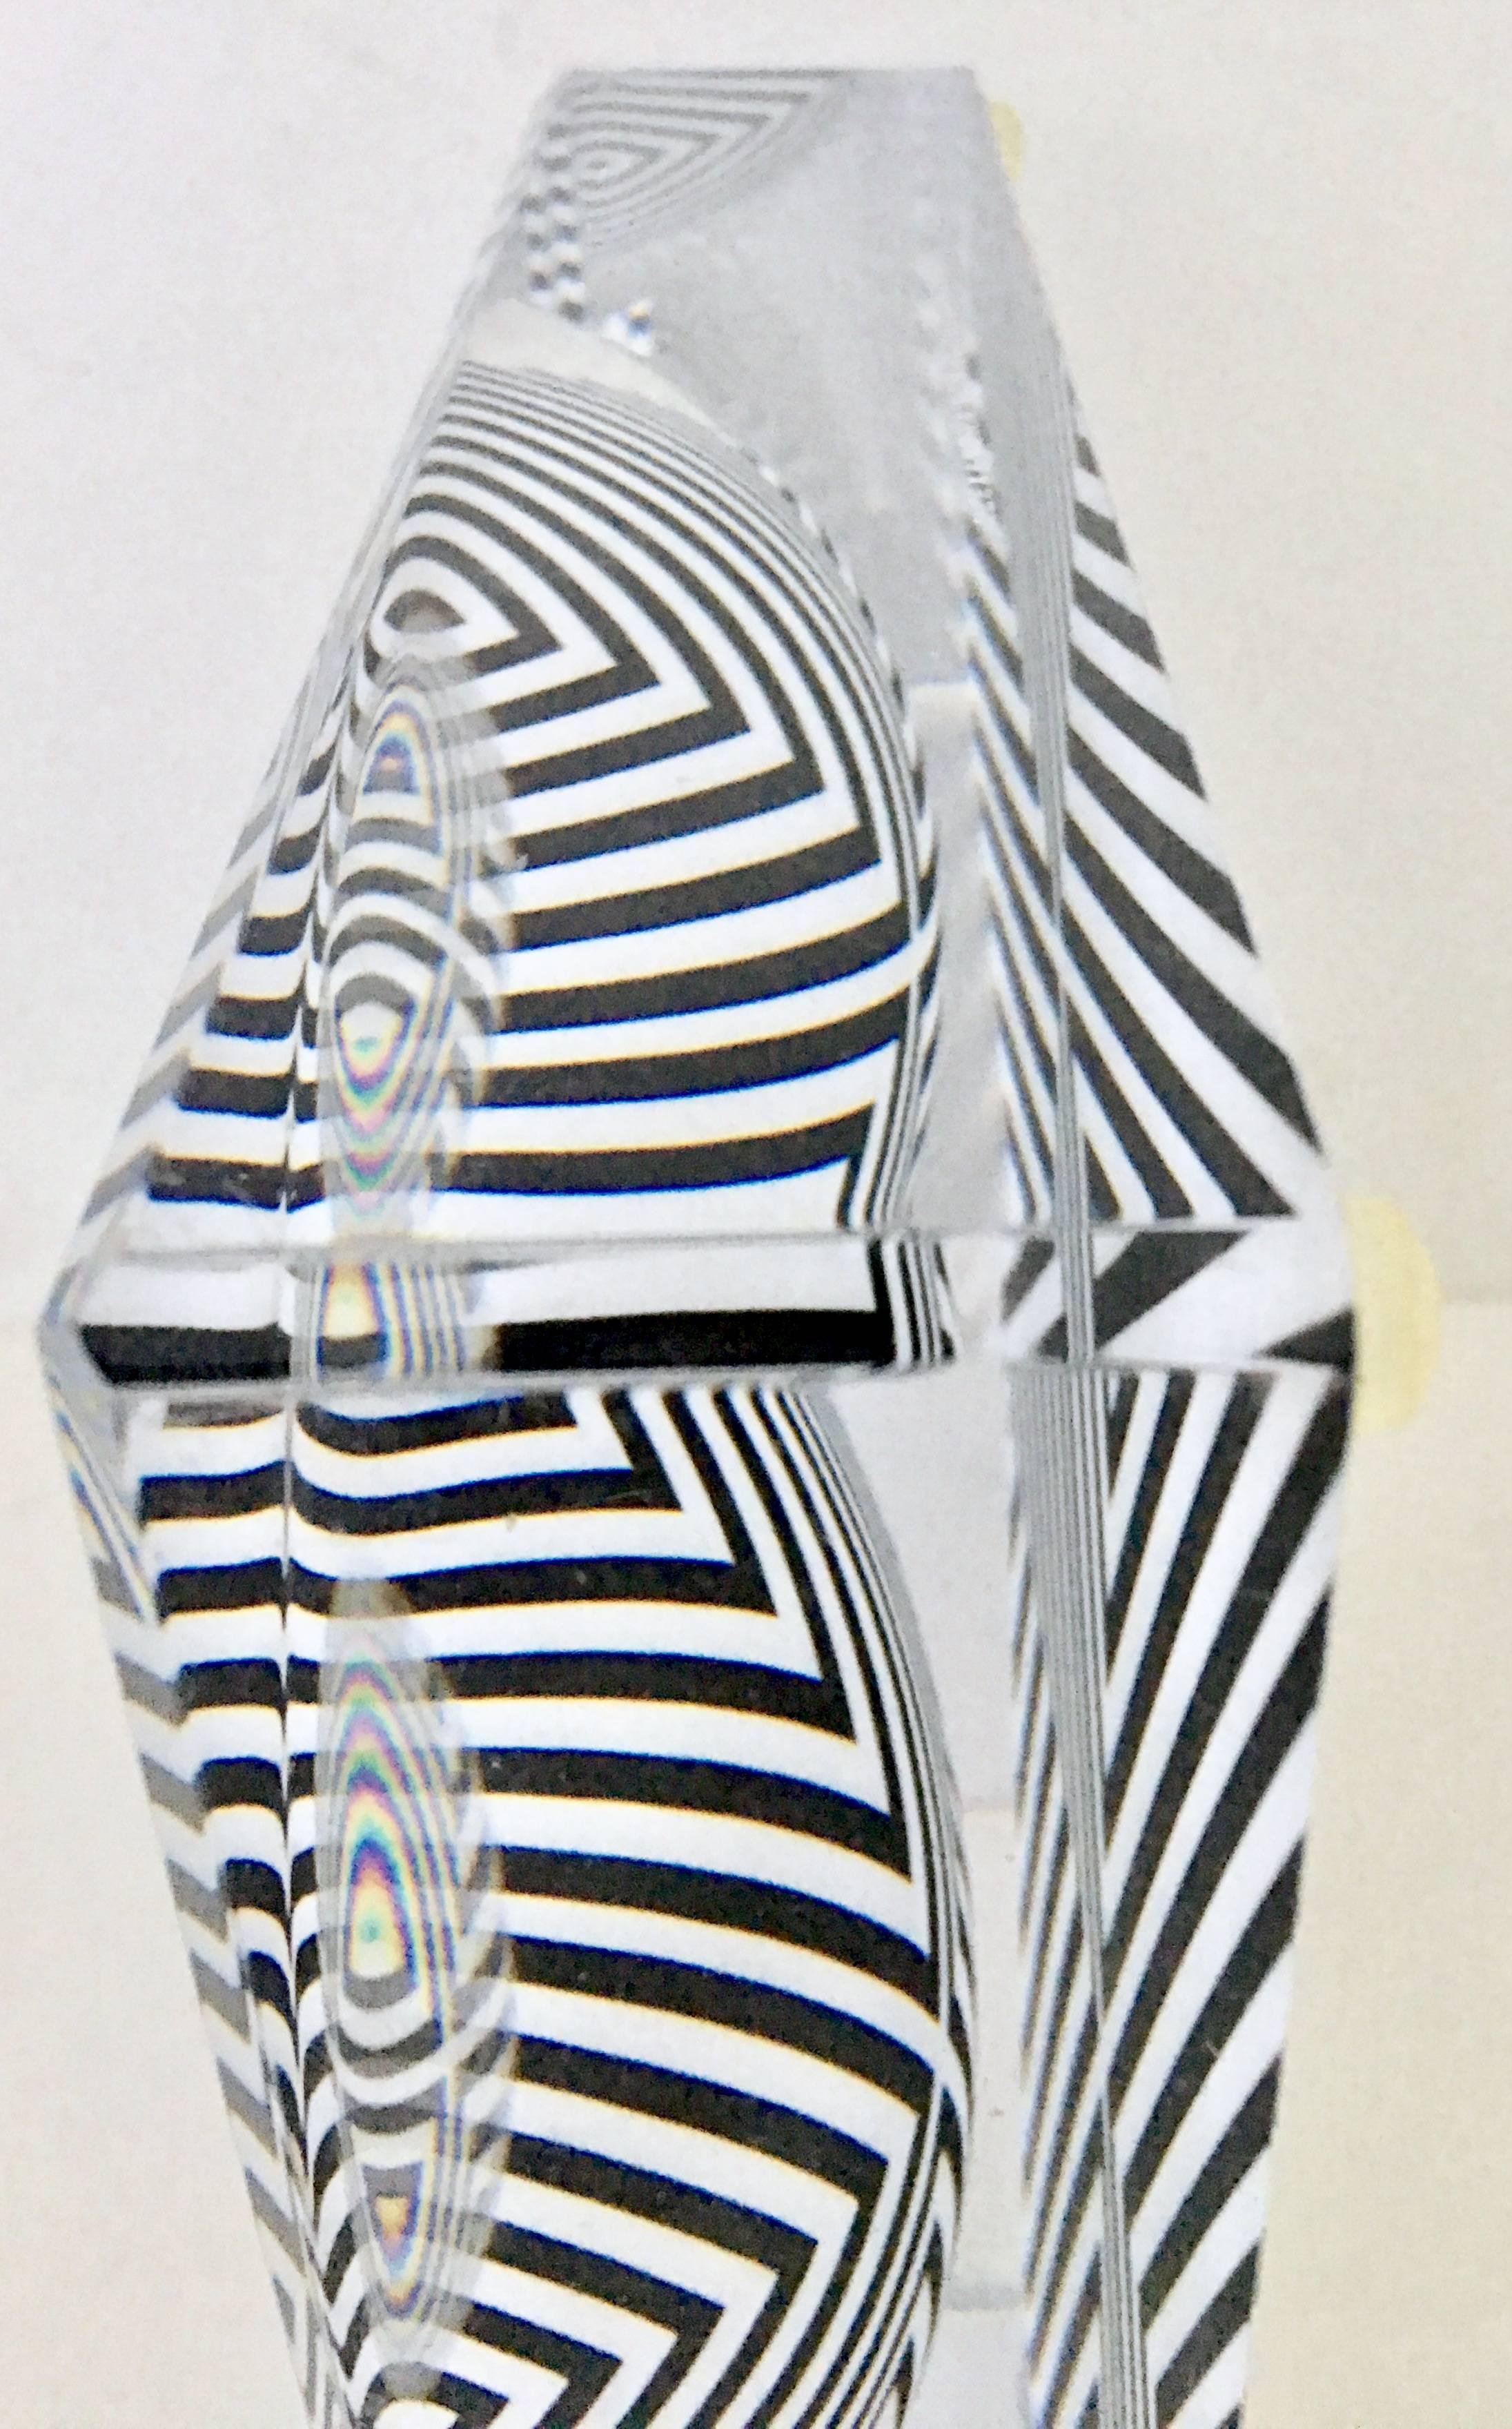 Lucite Optic Zebra Print Square Bowl by, Alexandra Von Furstenberg 1